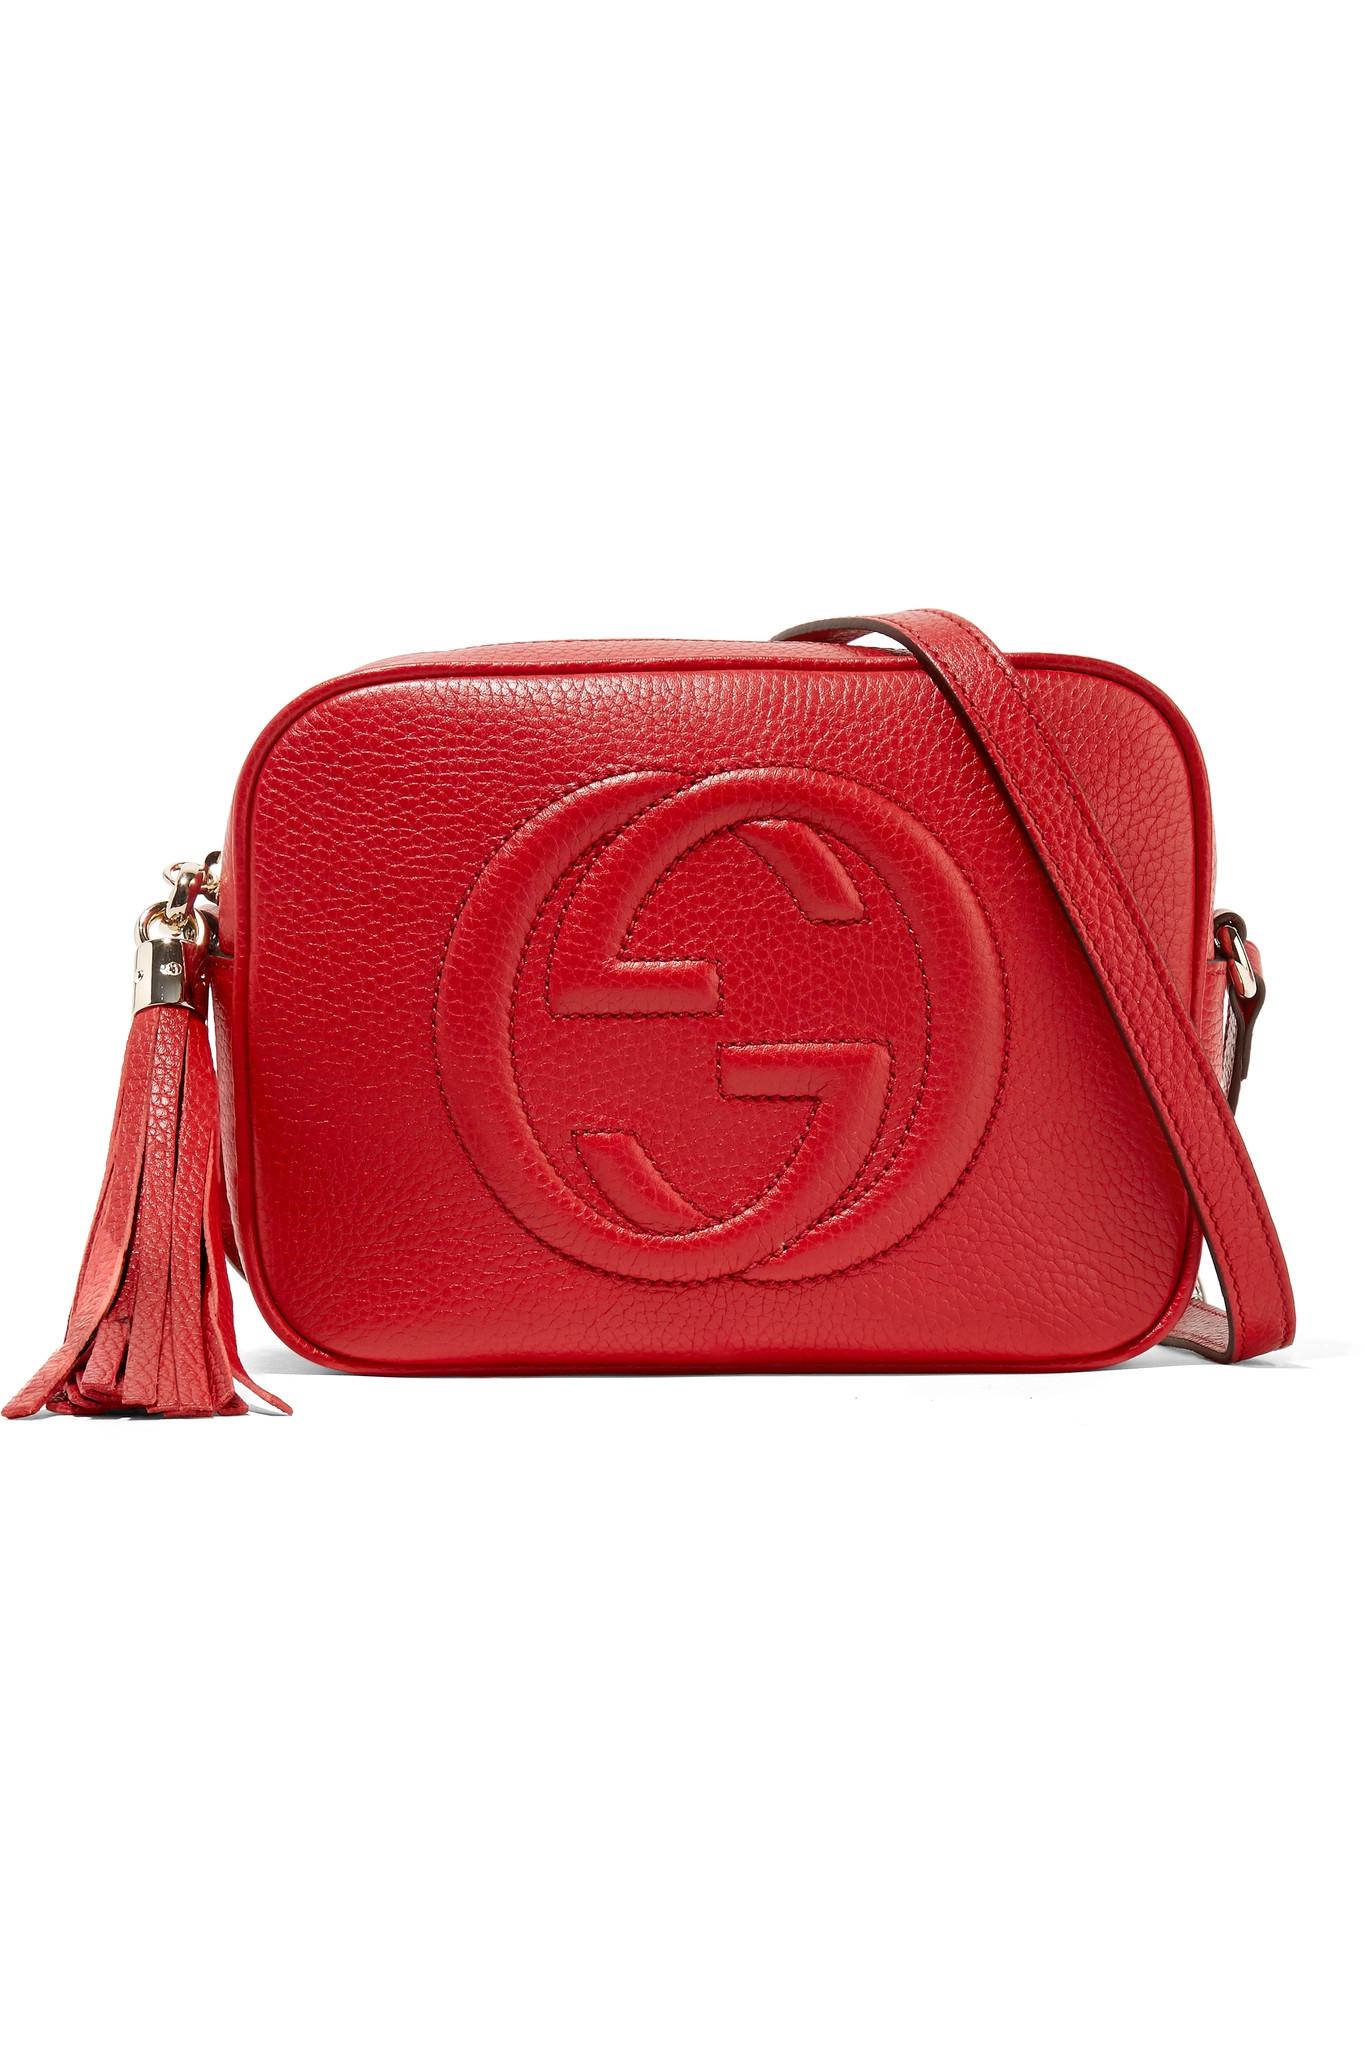 Brand più venduti - Gucci red Soho Disco Textured leather Shoulder Bag - Neomag. - Neomag - Read ...